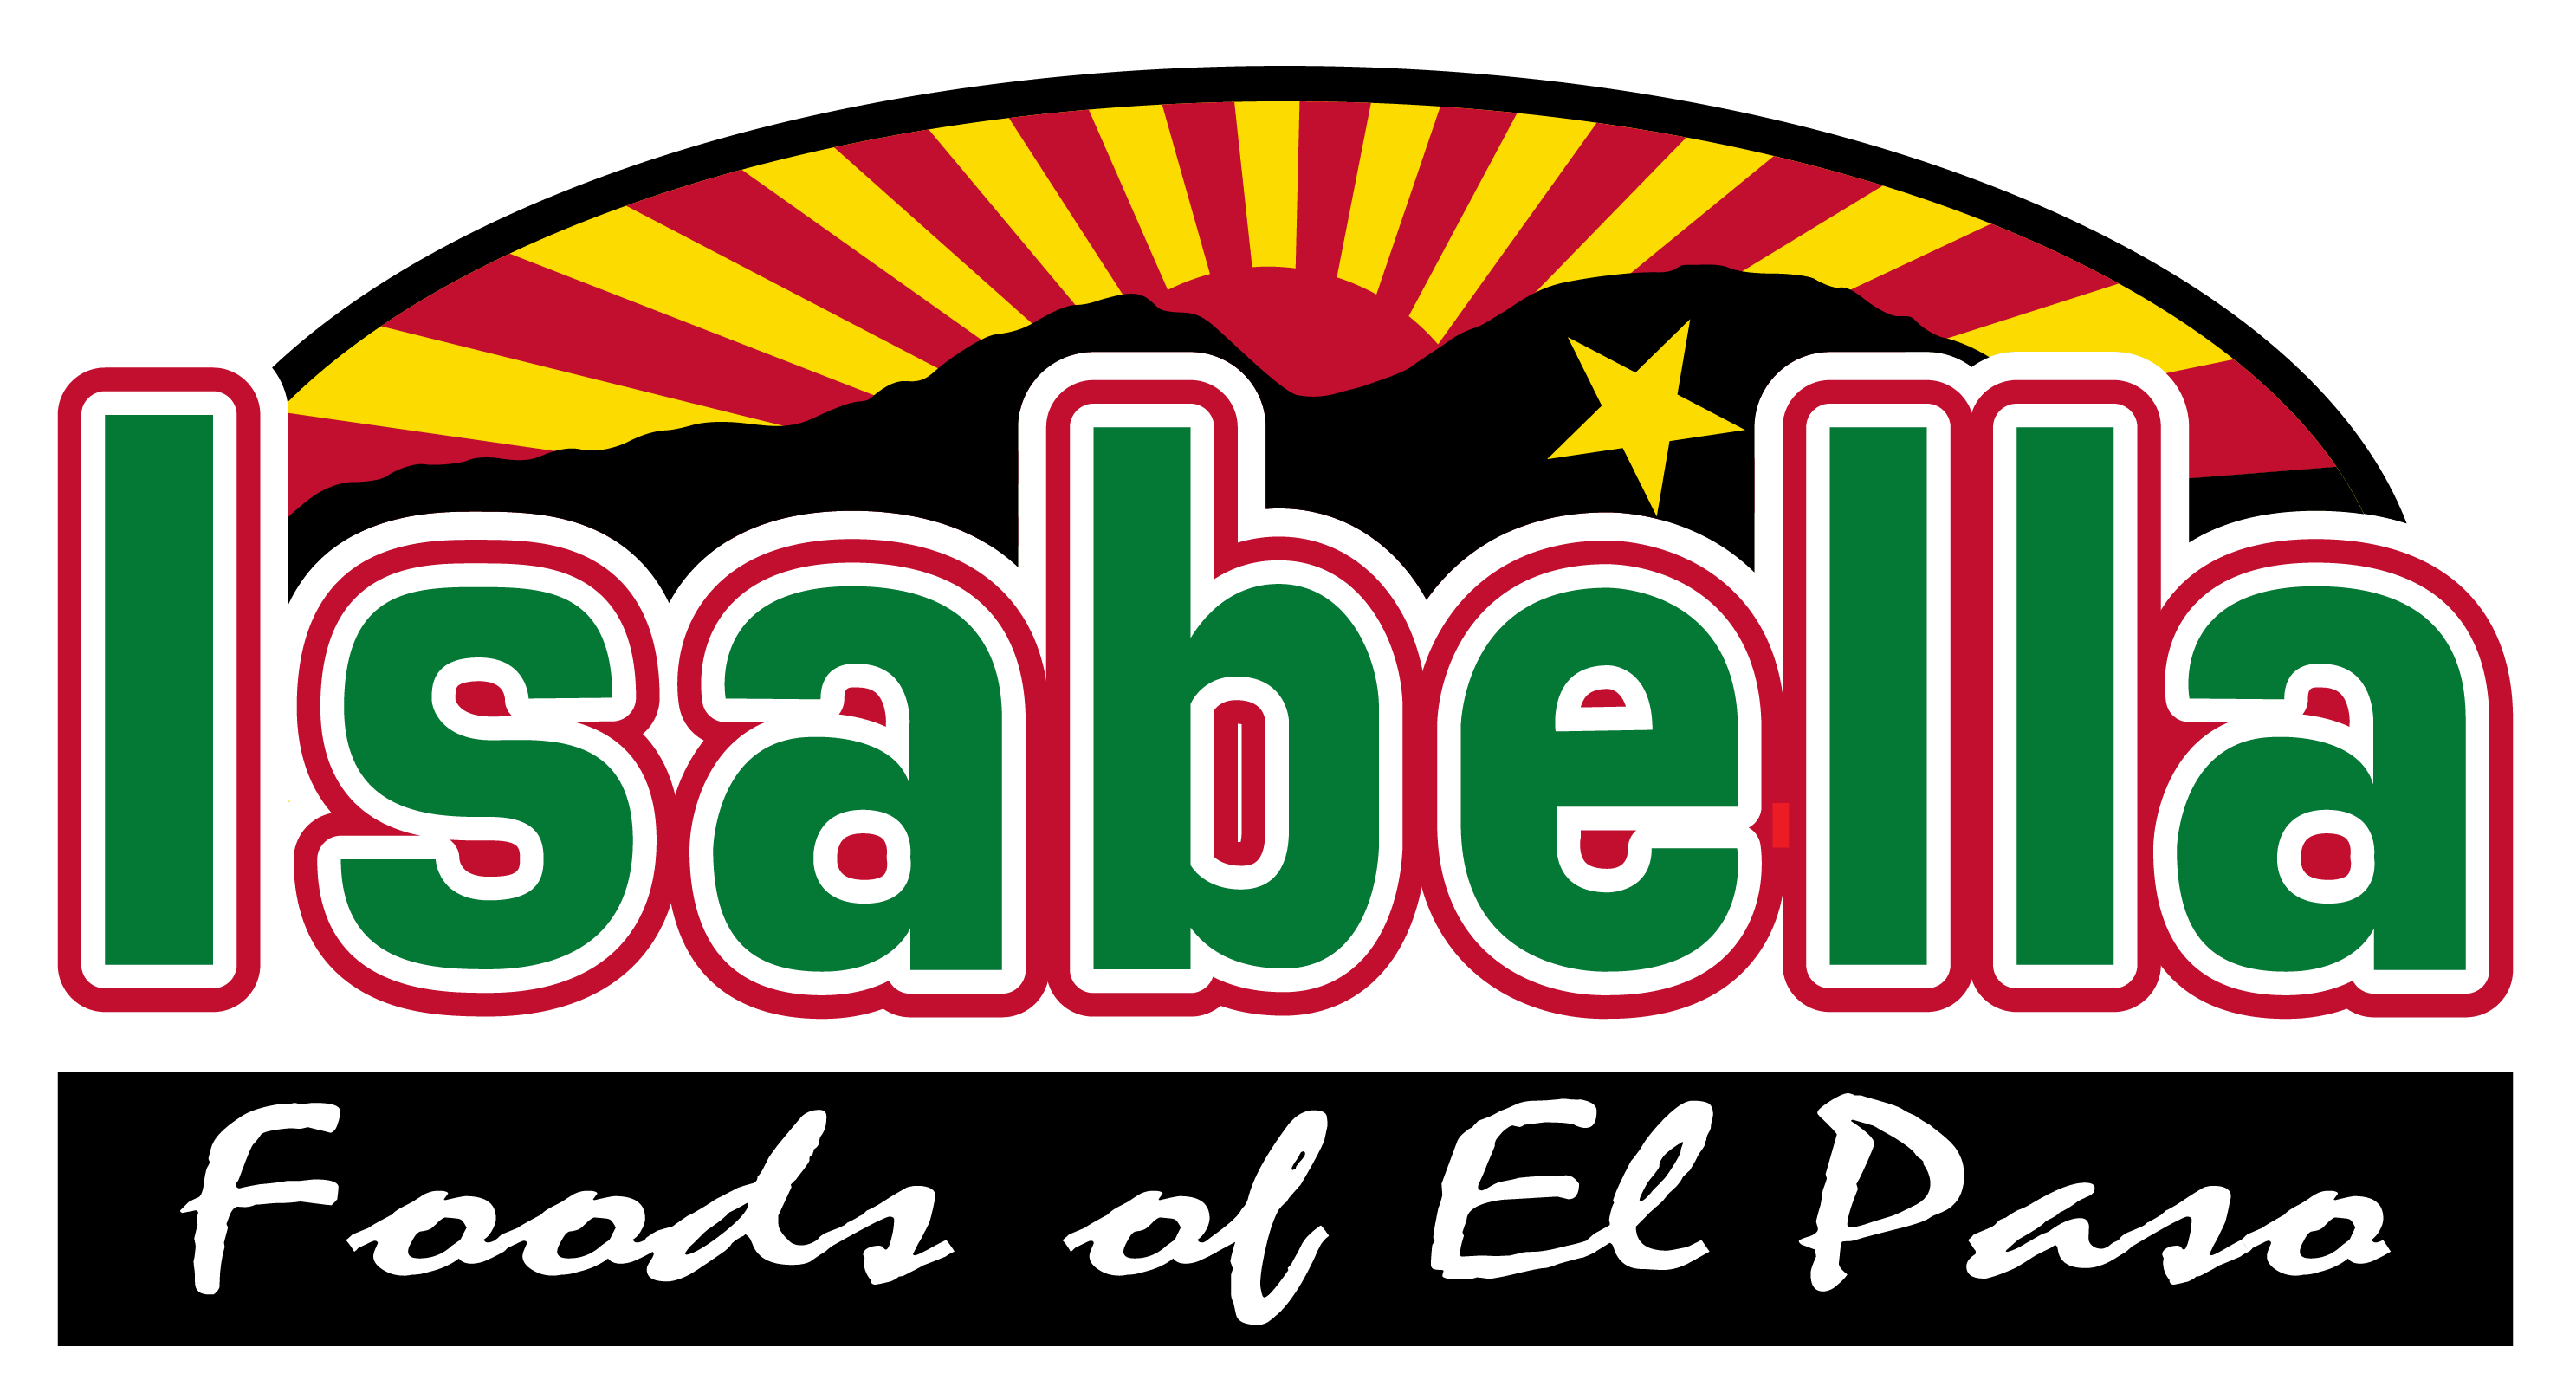 Isabella logo